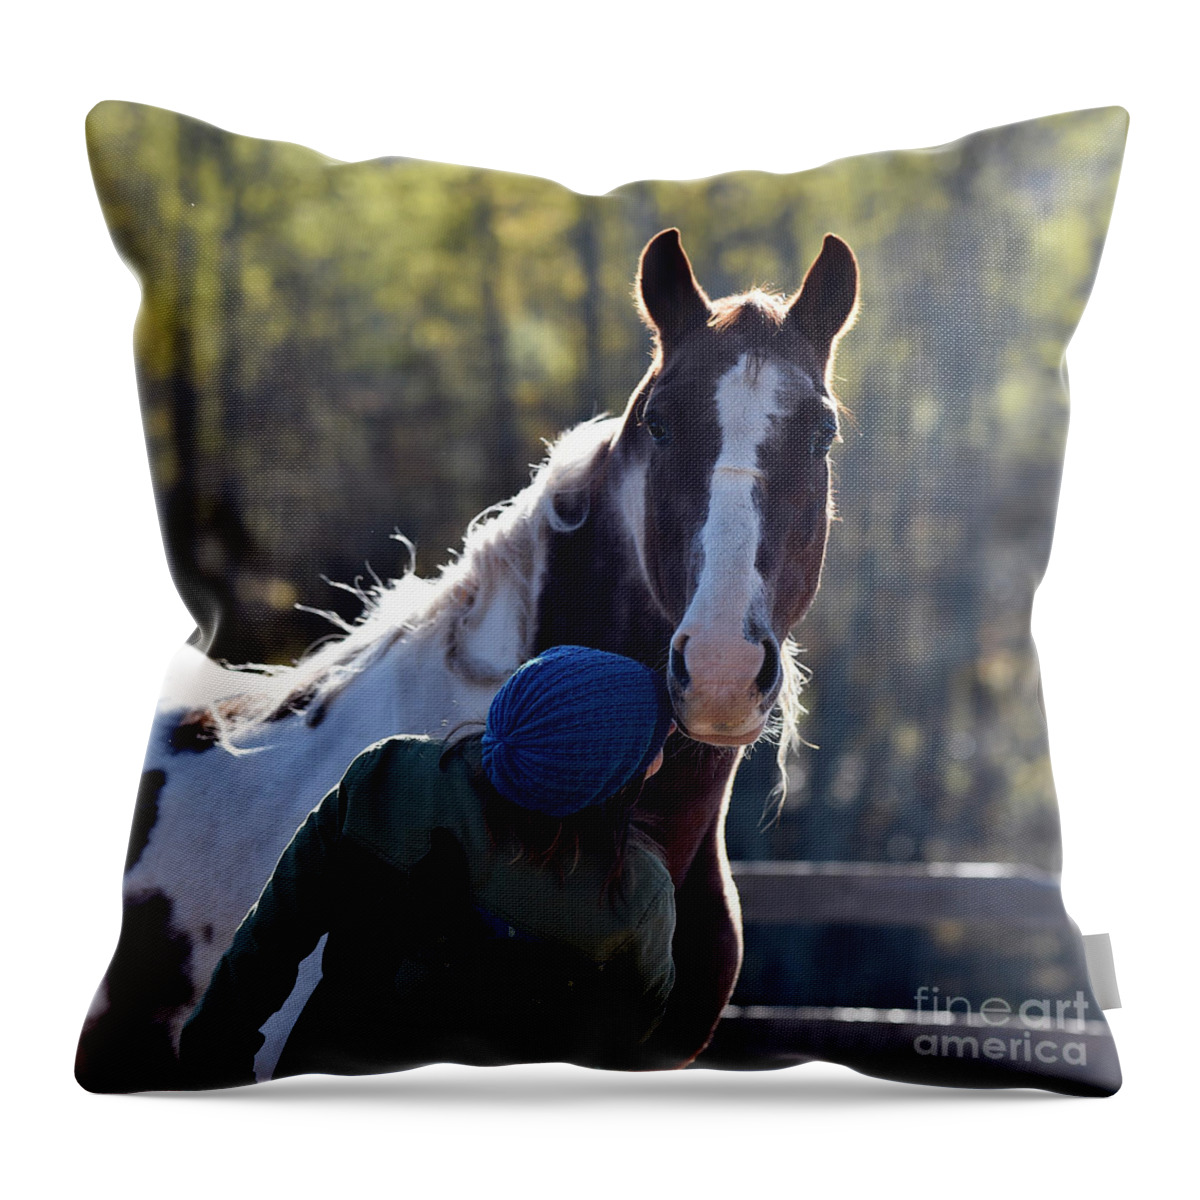 Rosemary Farm Throw Pillow featuring the photograph Rhett by Carien Schippers